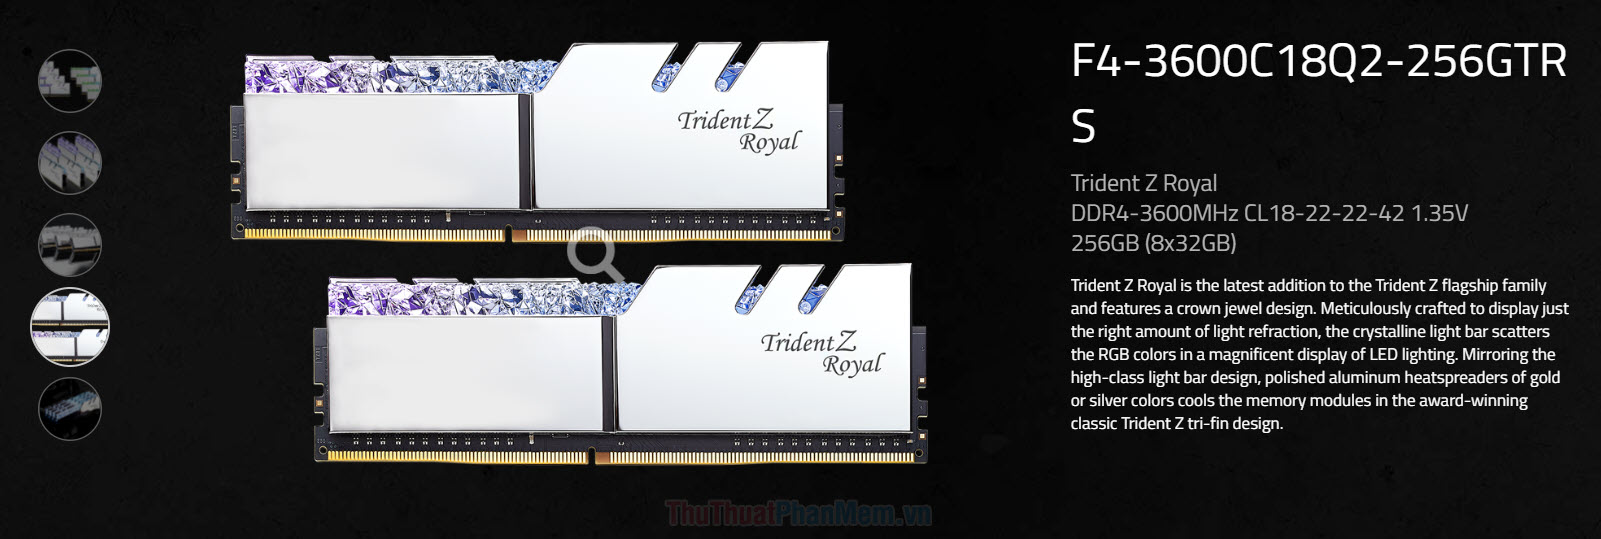 Trident Z Royal DDR4-3600MHz CL18-22-22-42 - 256GB (8x32GB)